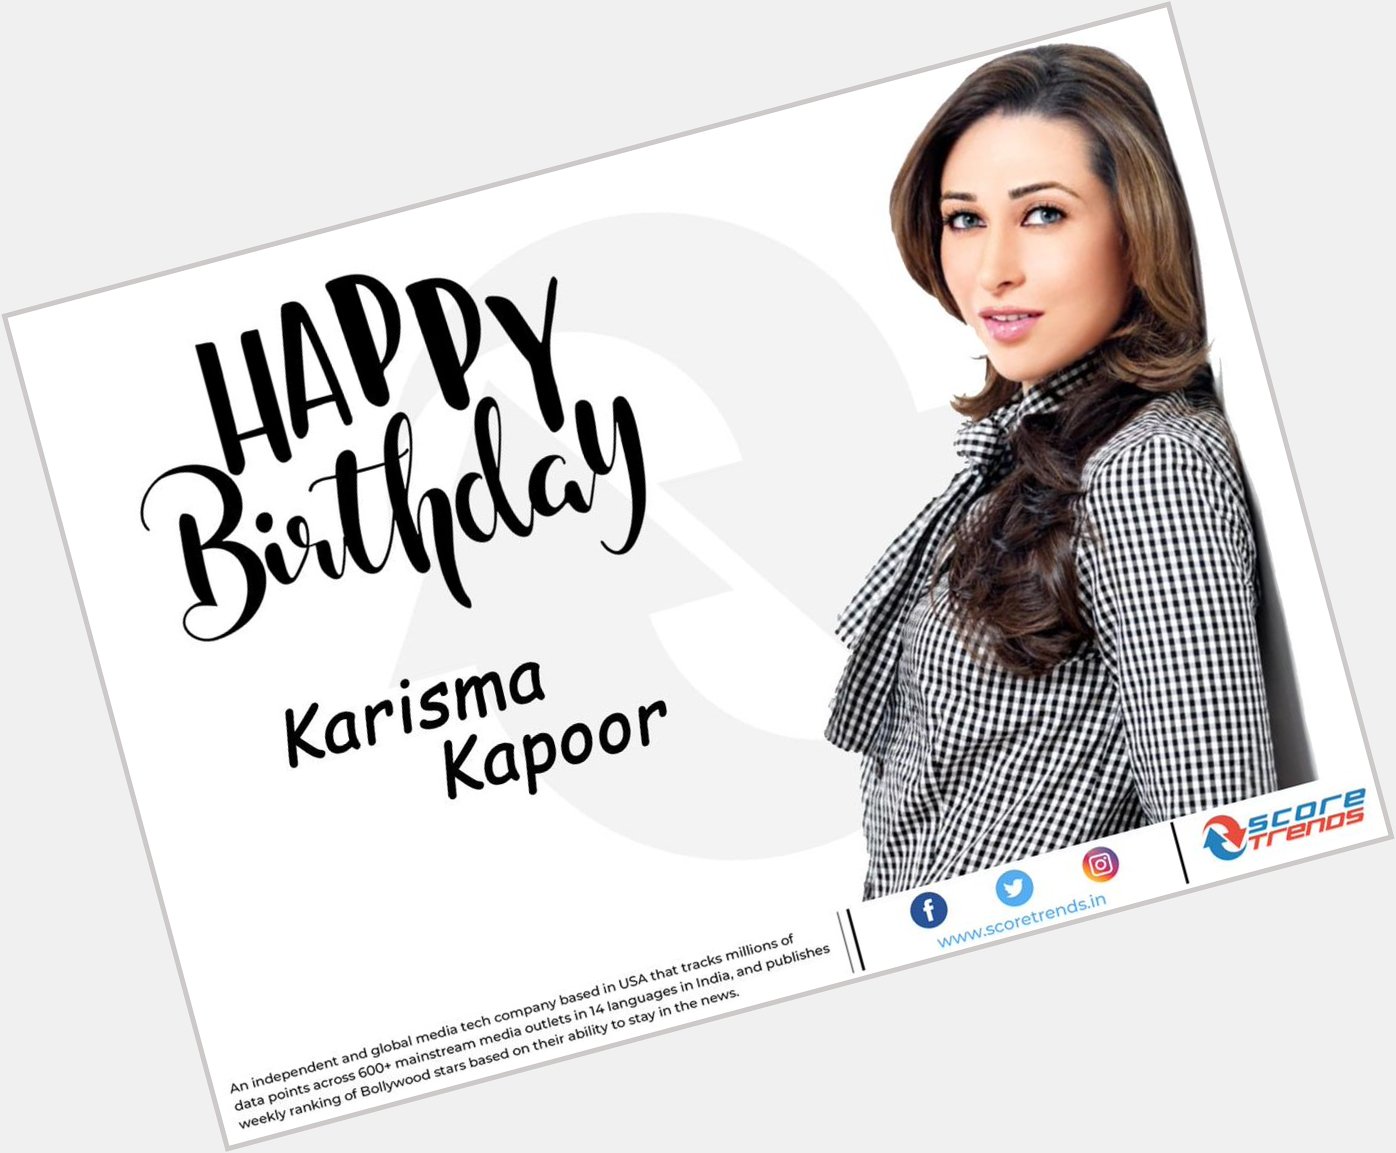 Score Trends wishes Karisma Kapoor a Happy Birthday!! 